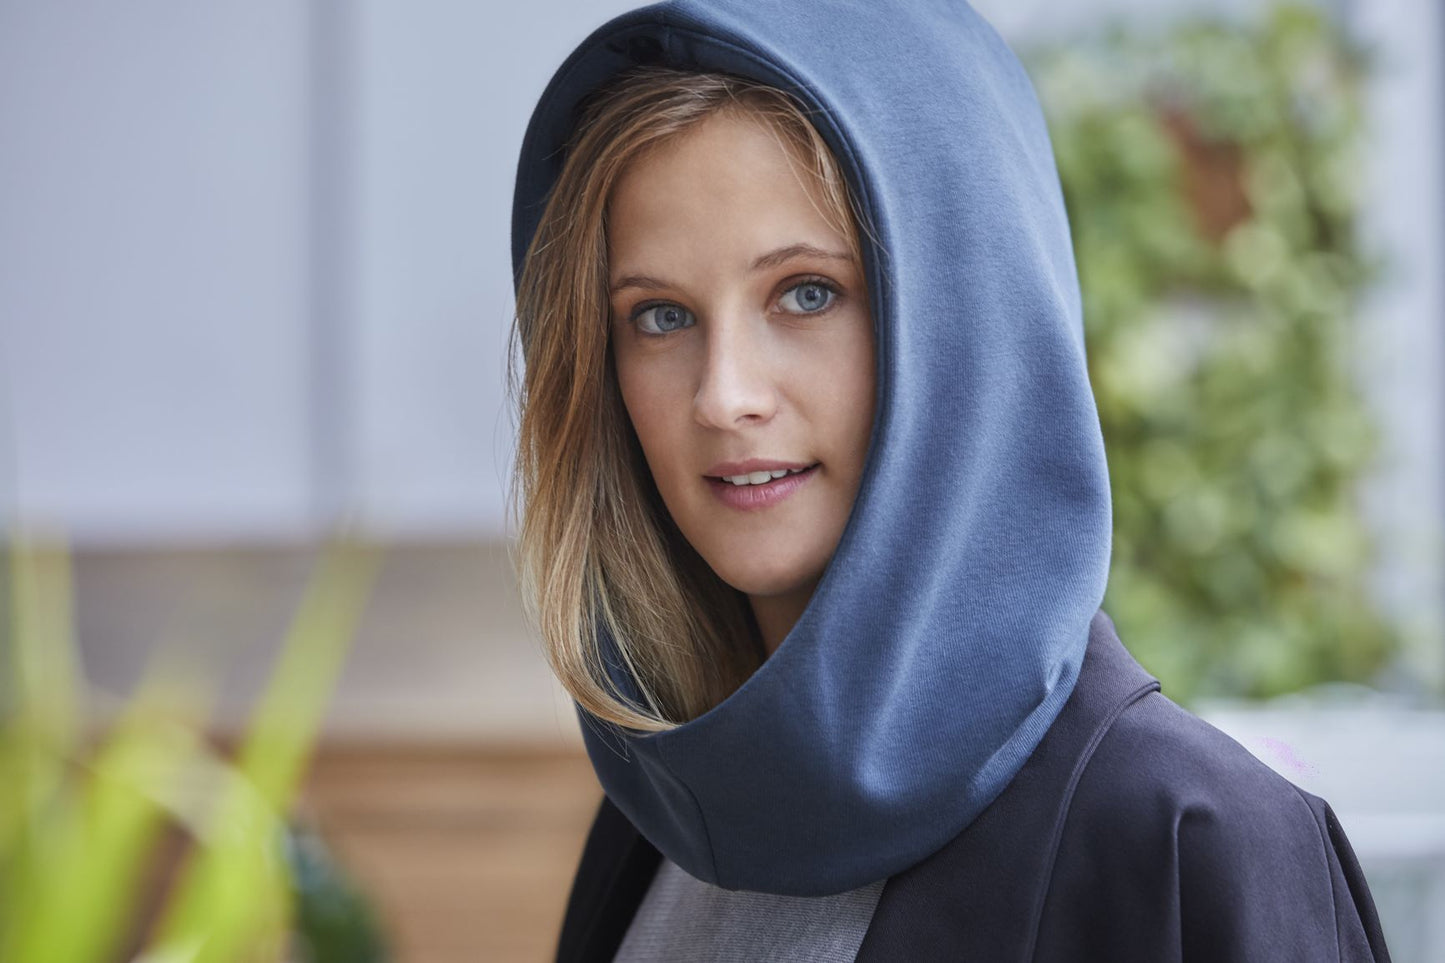 Woman wearing the hood.